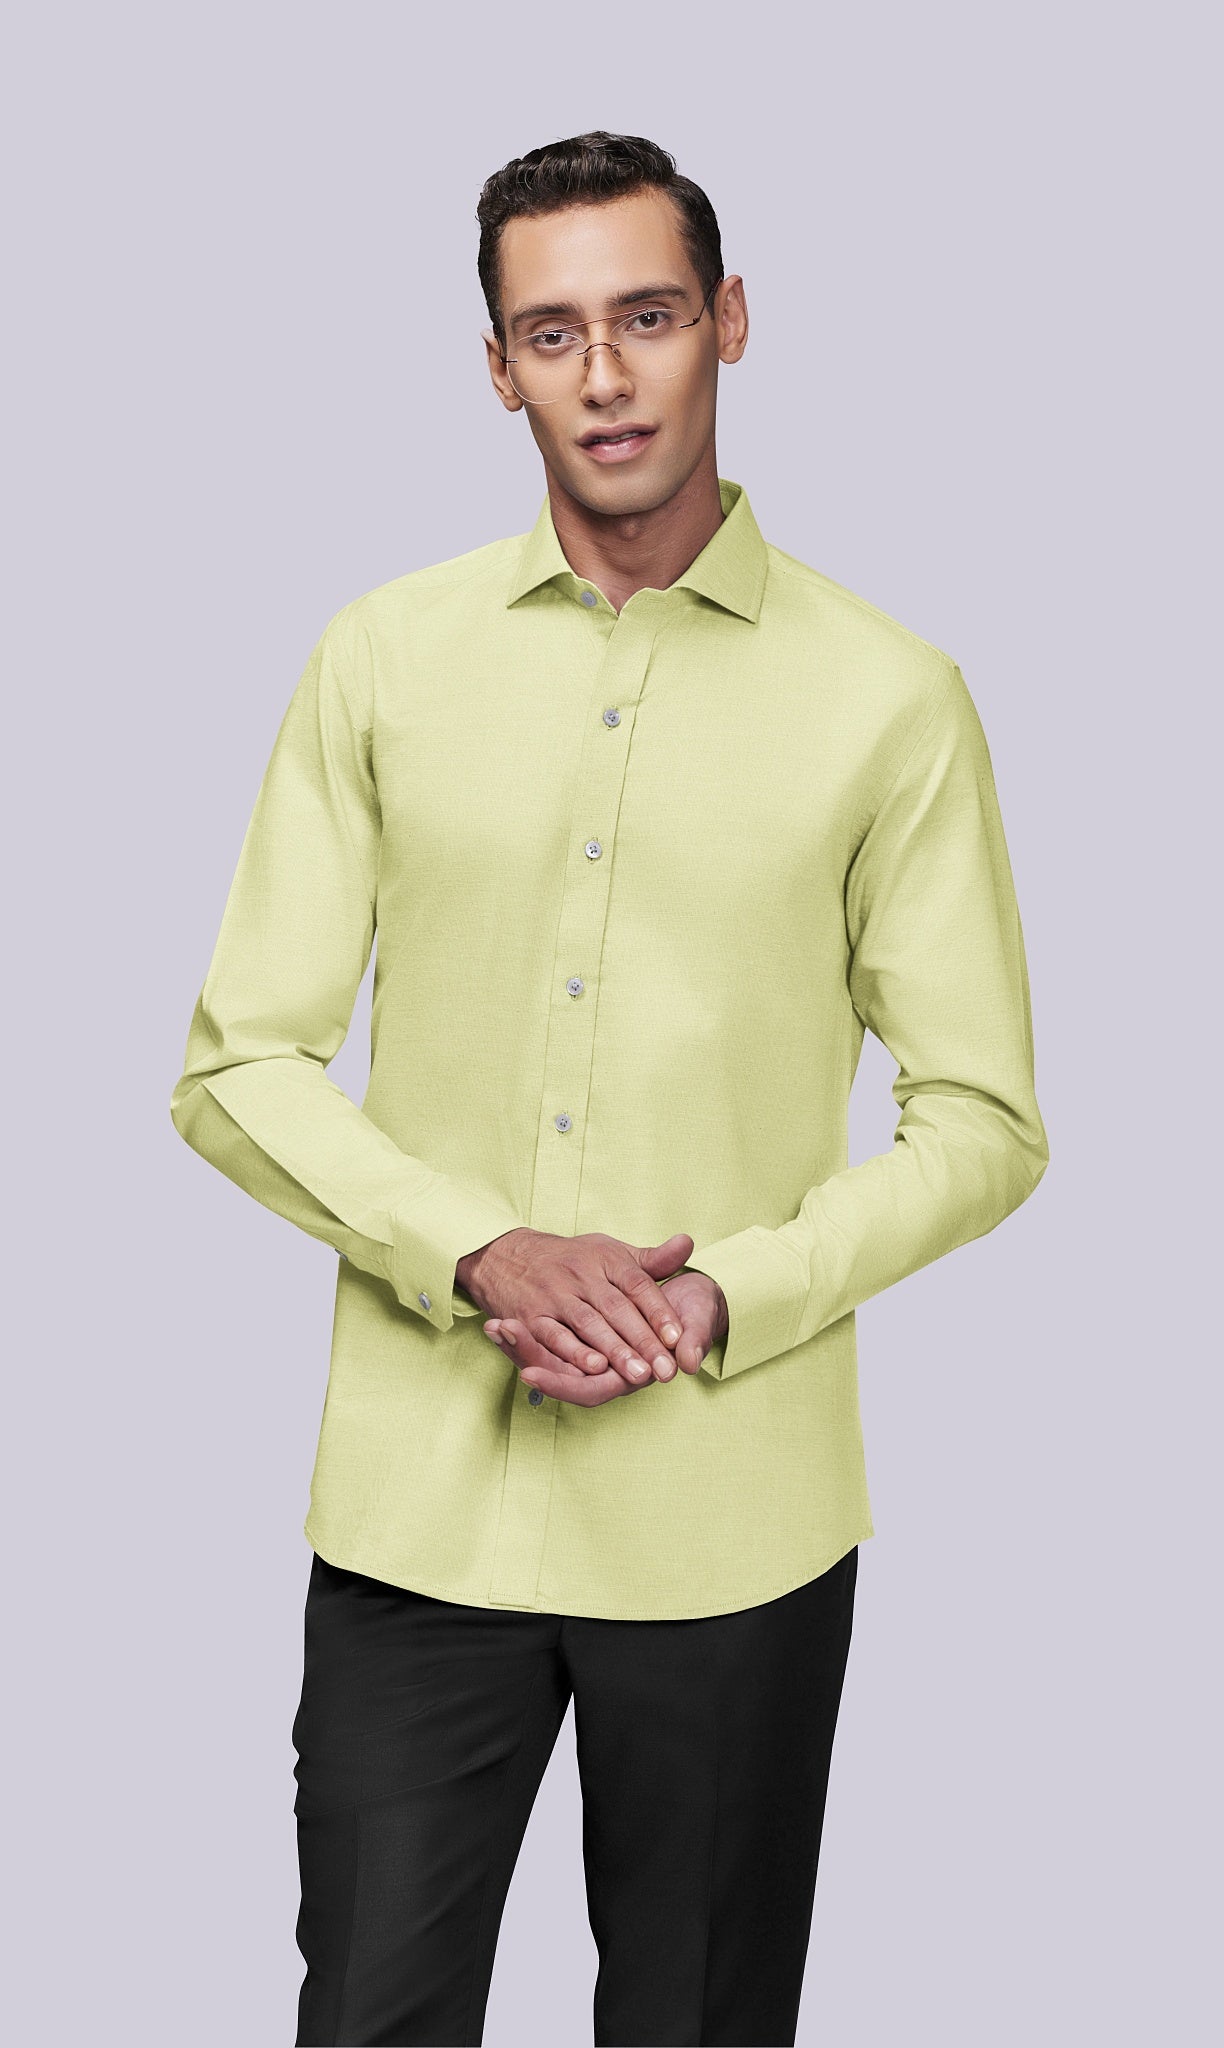 Men's Yellow shirt